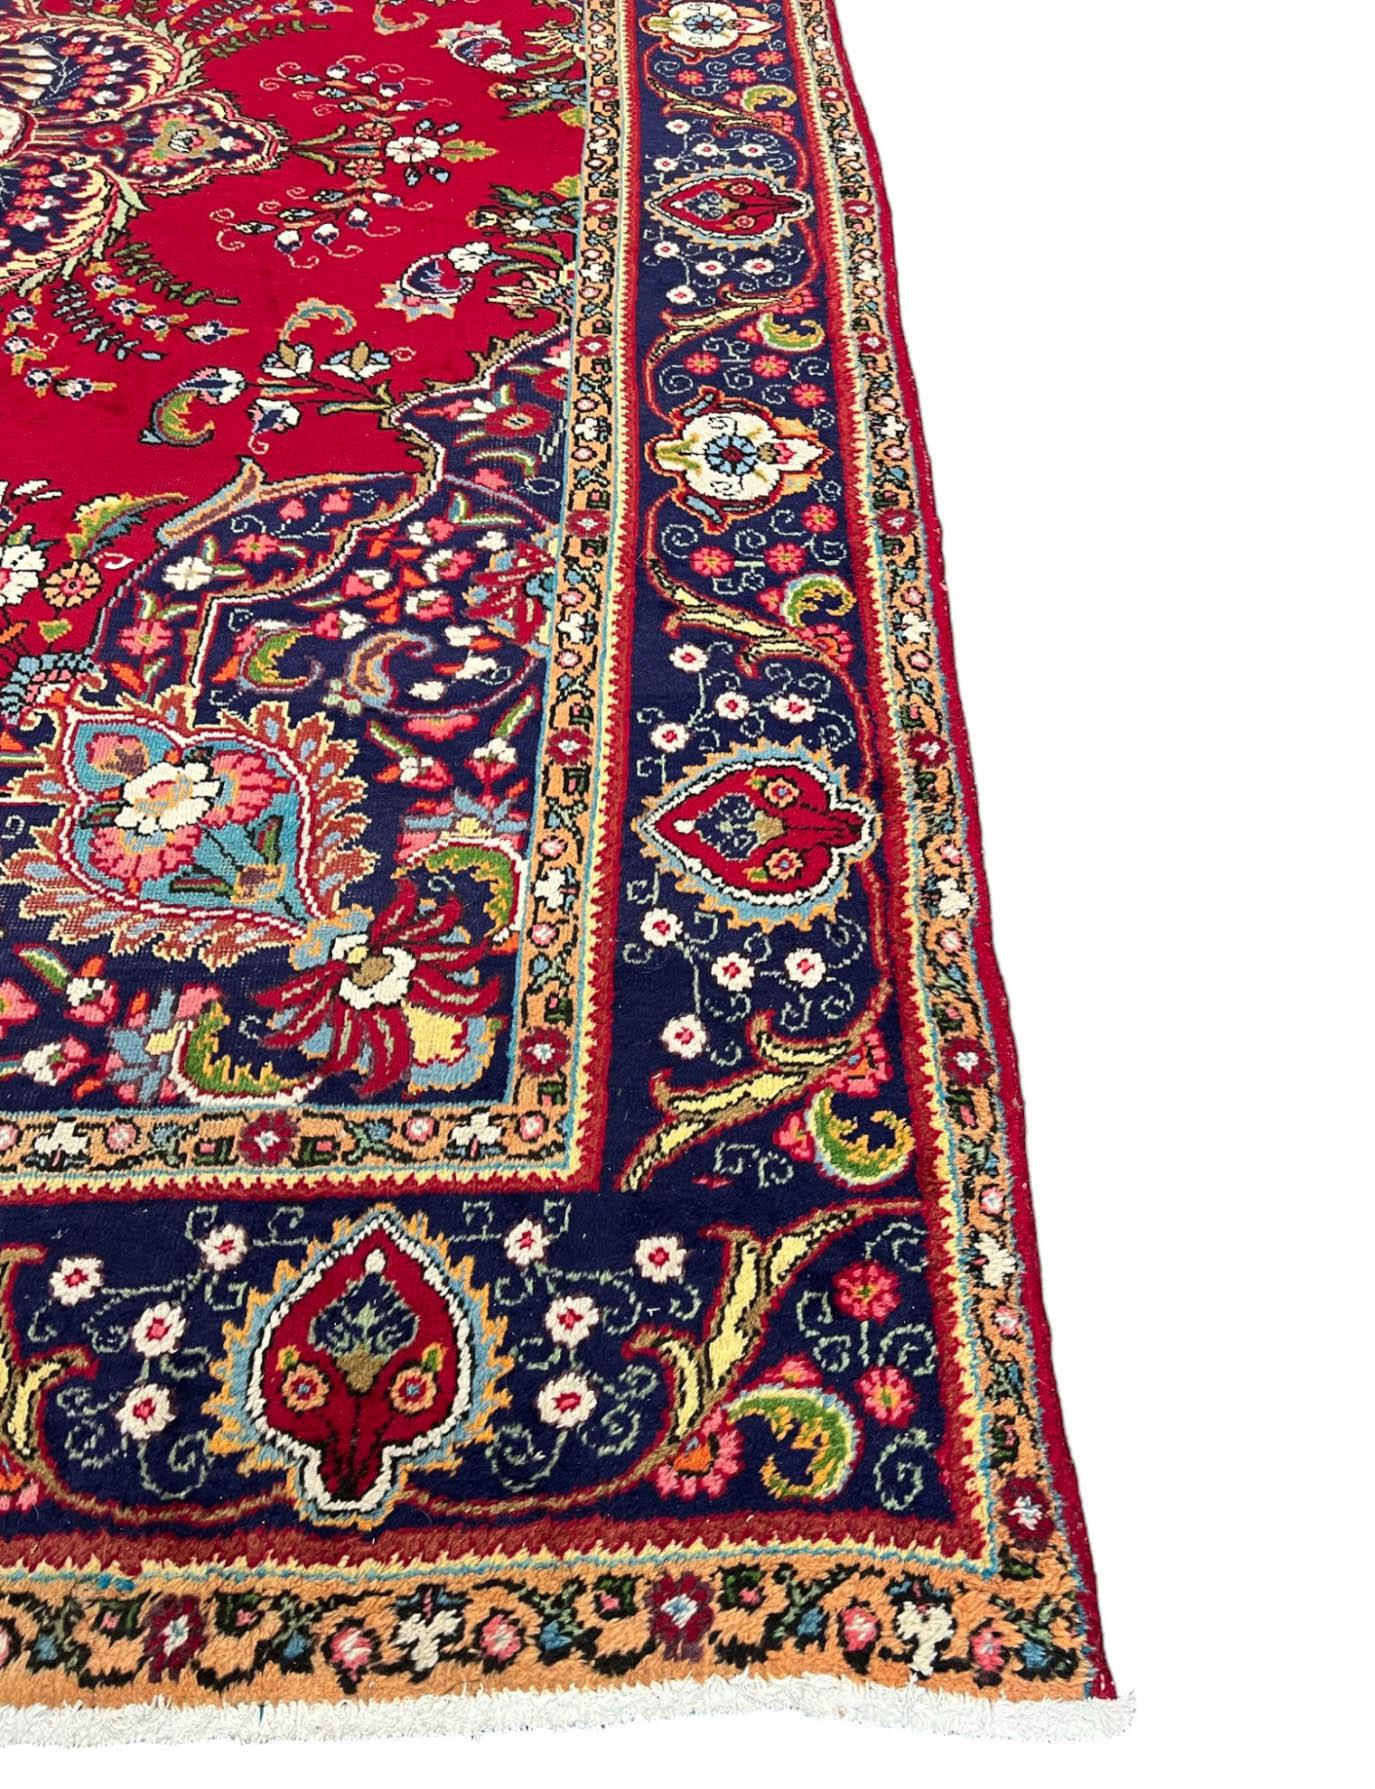 20th Century 10' x 13' Persian Tabriz Area Rug  For Sale